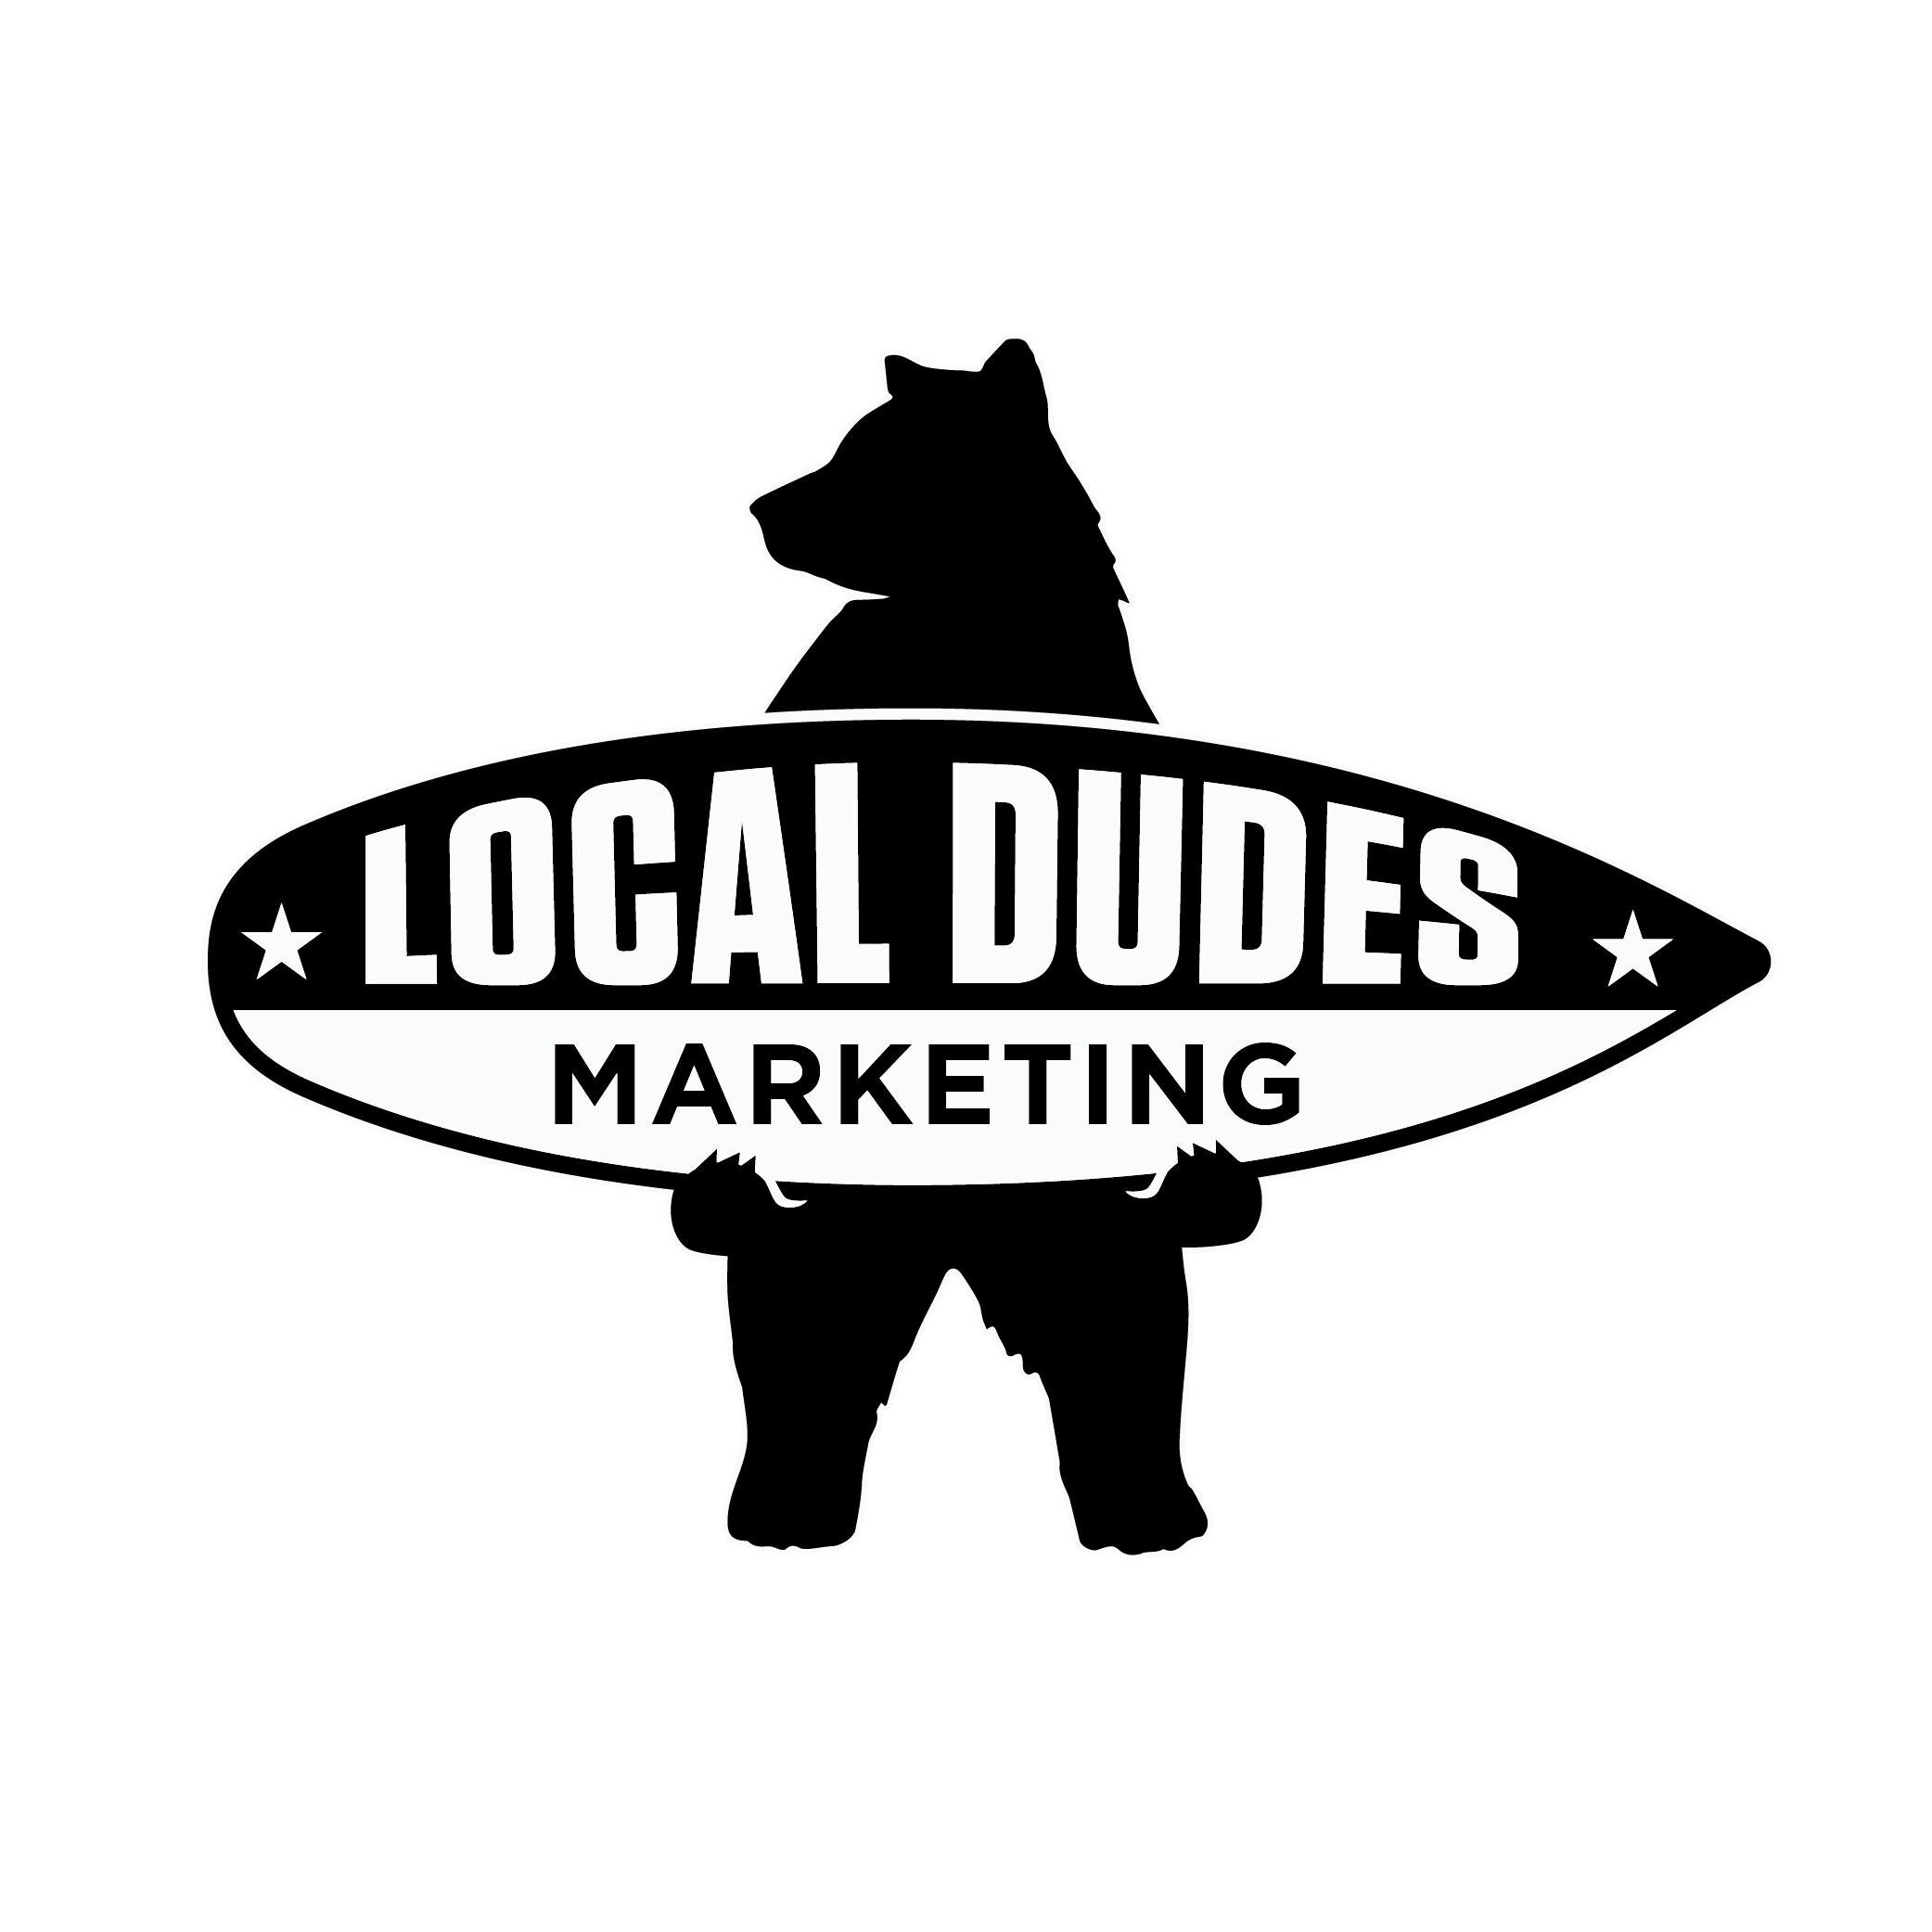 Local Dudes Marketing